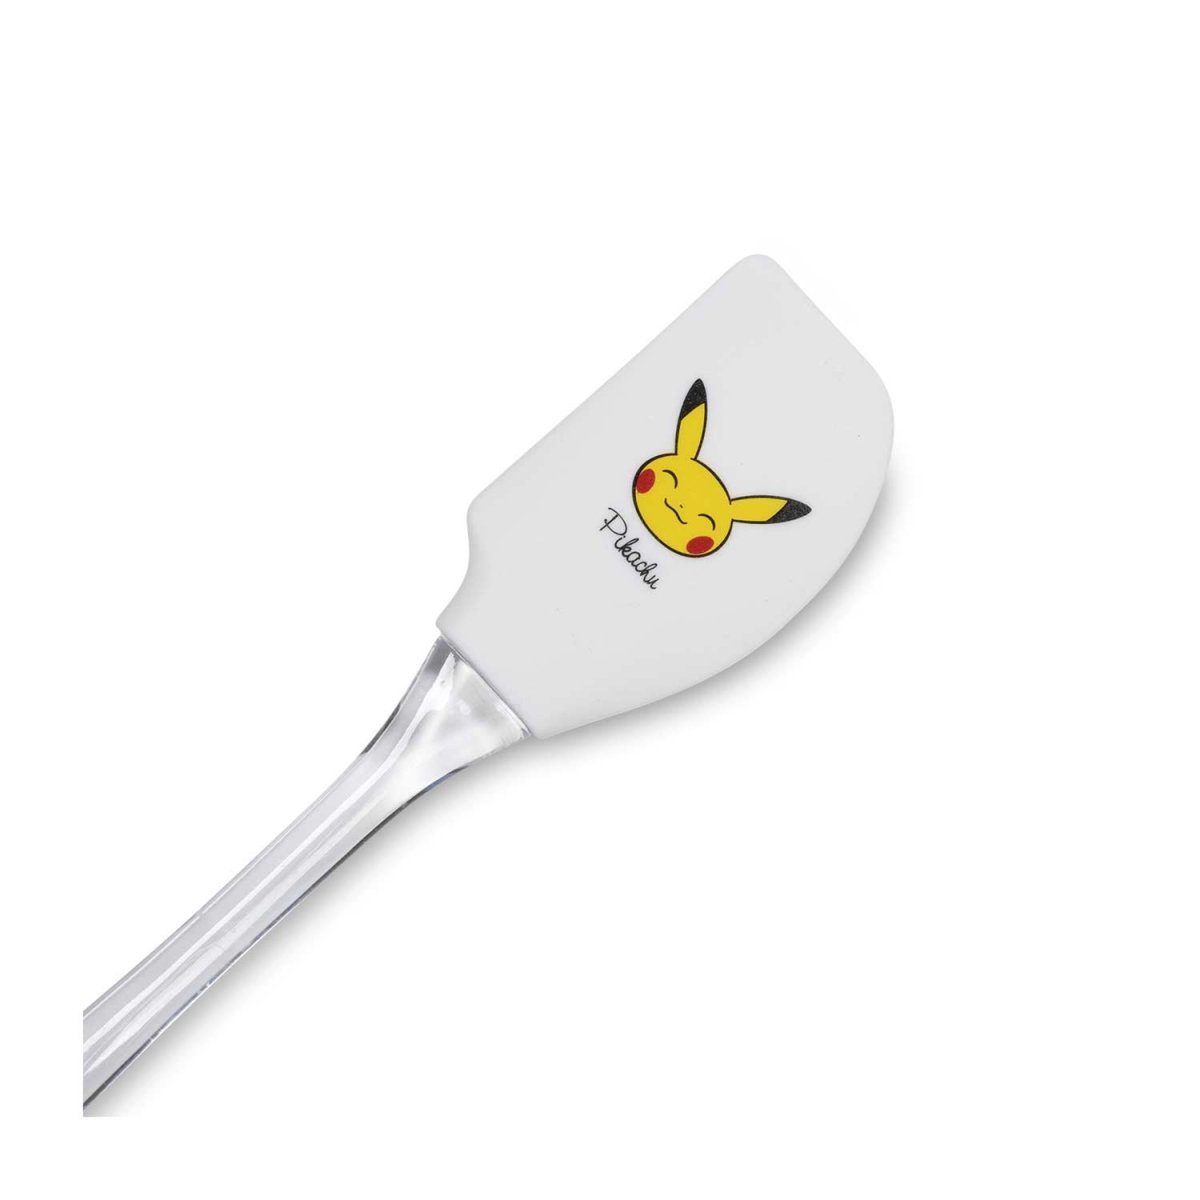 Pikachu Kitchen Spatulas (2-Pack)